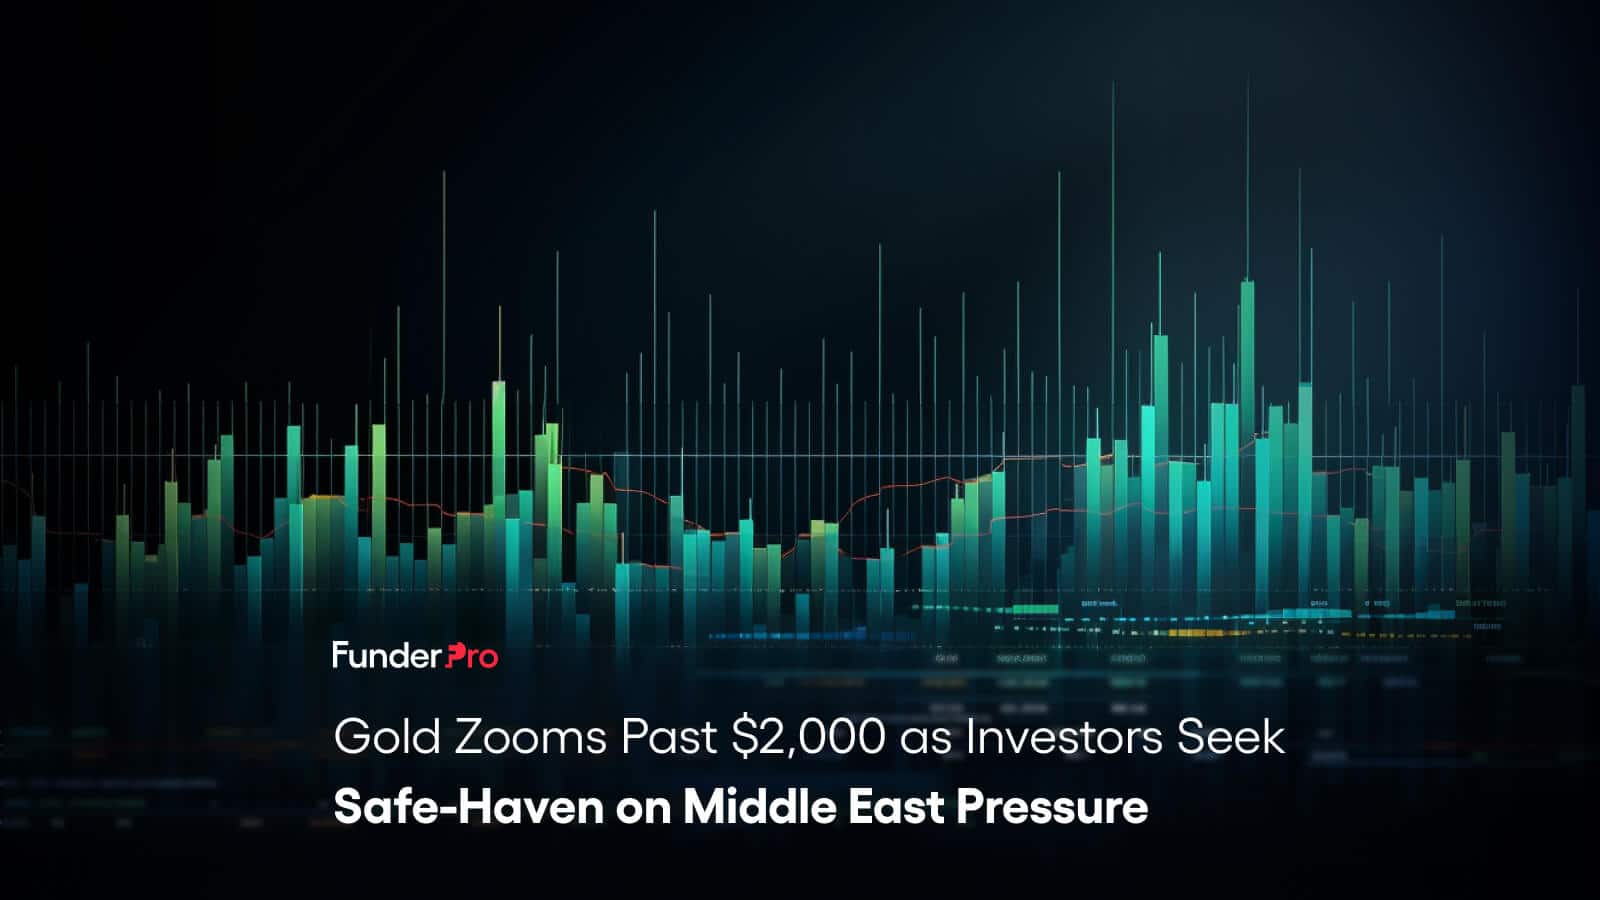 Gold Zooms Past $2,000 as Investors Seek Safe-Haven on Middle East Pressure